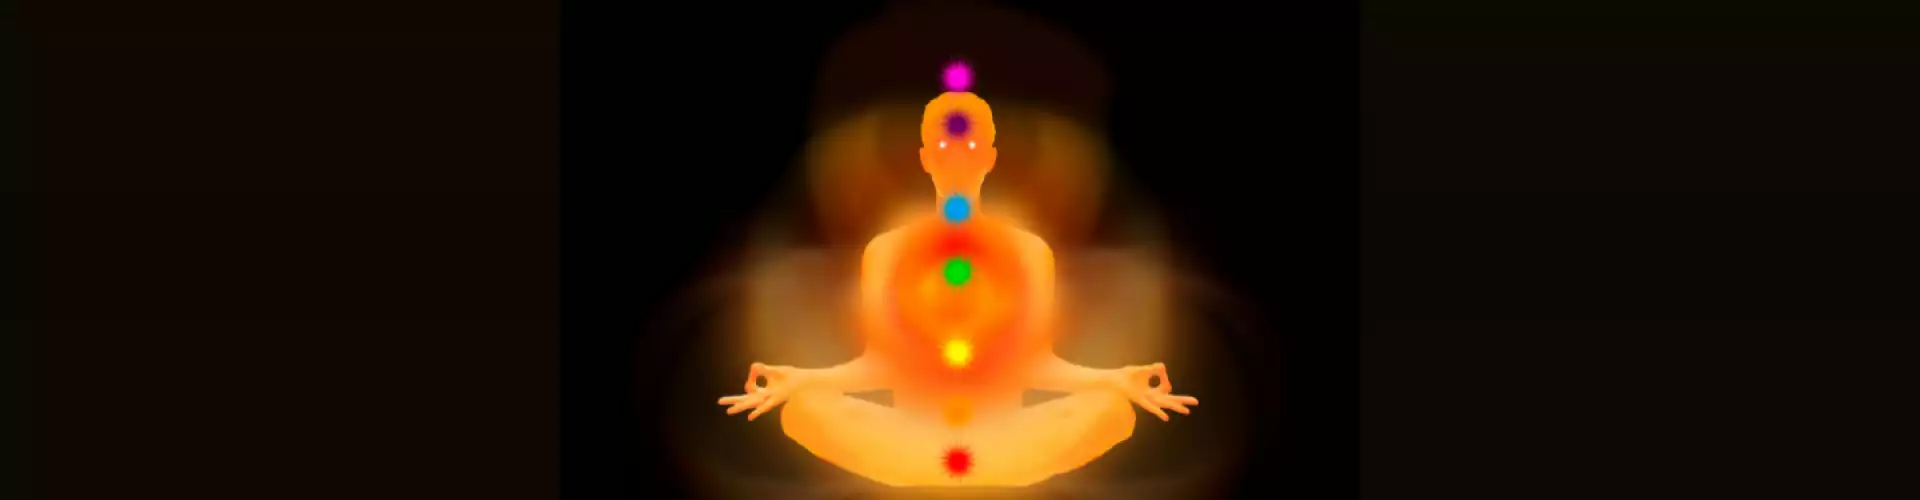 Yoga Prānāyāma to Open Your Brow Chakra